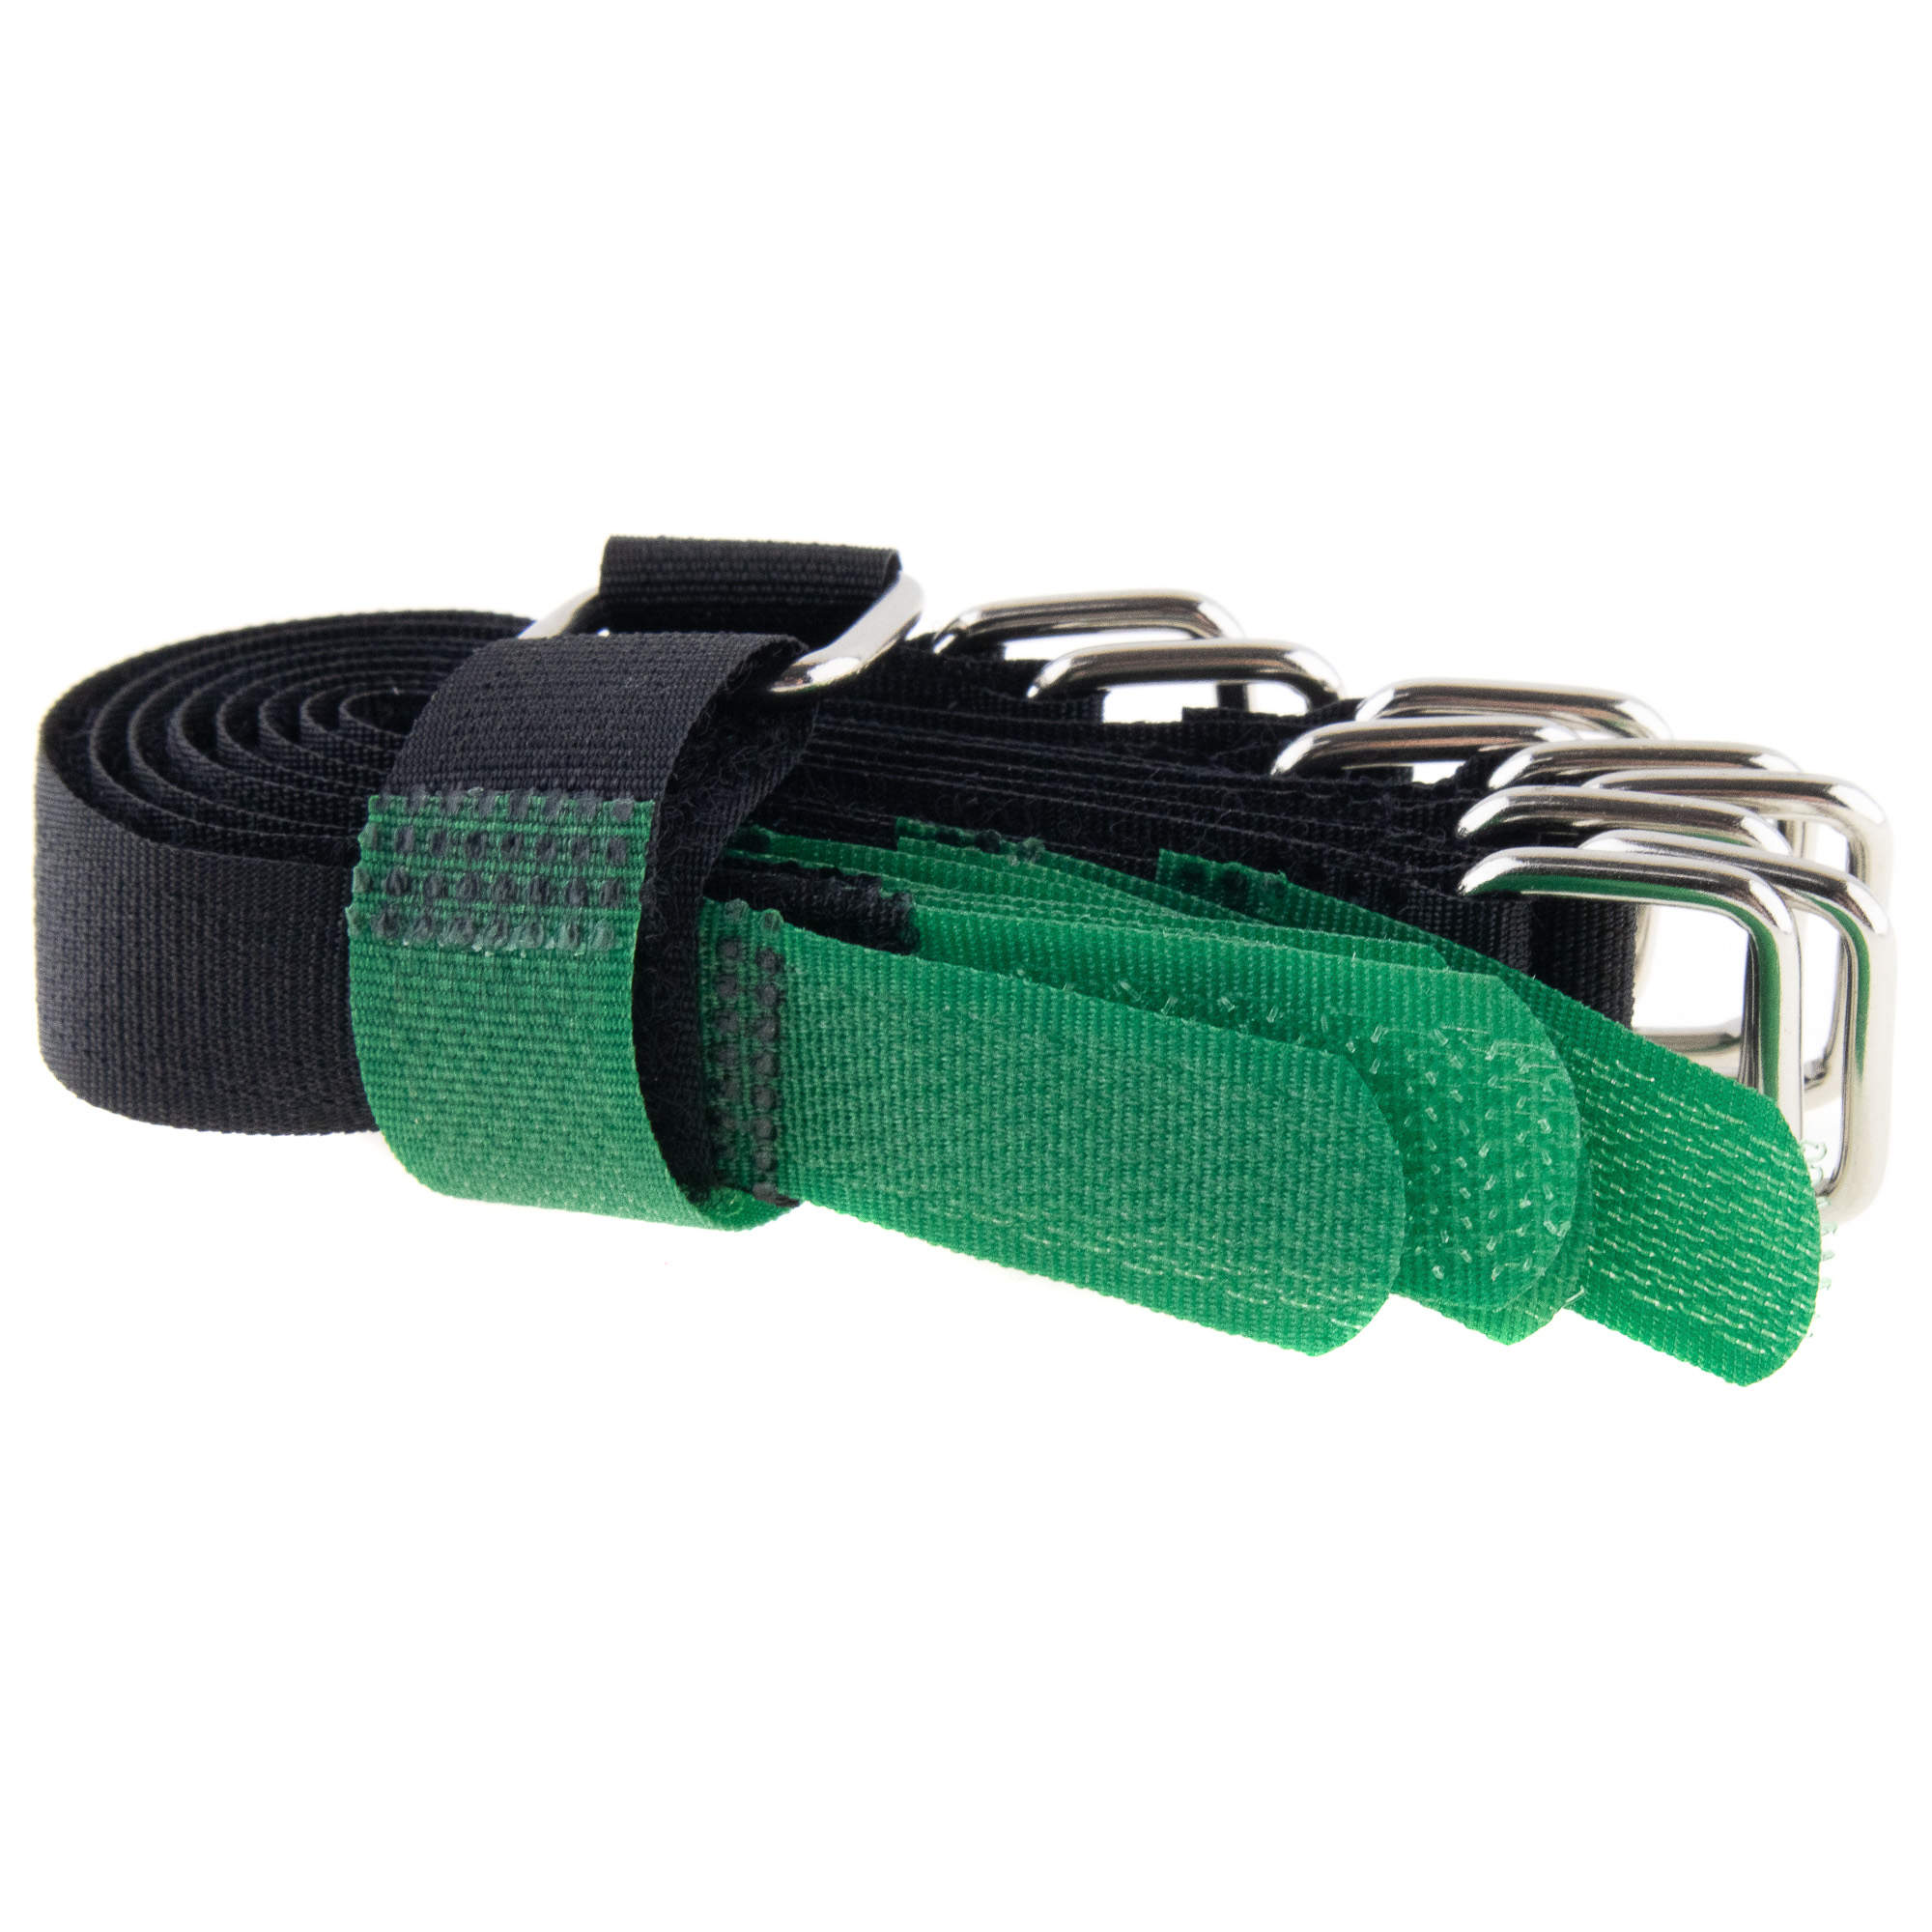 Hook-and-loop strap 150x16, black/green, 10PCS